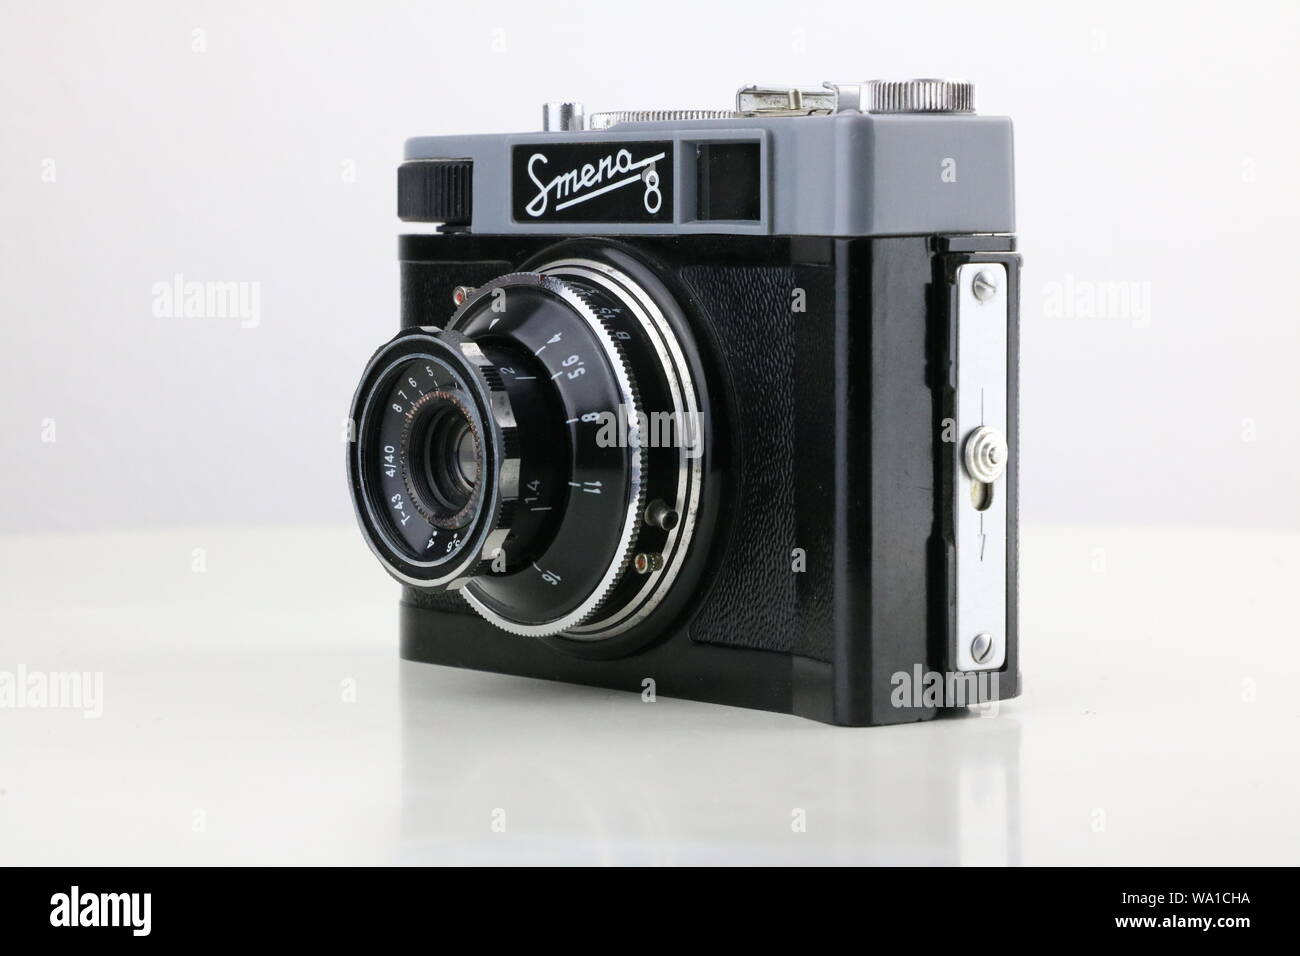 Smena-8, vintage soviet camera Stock Photo